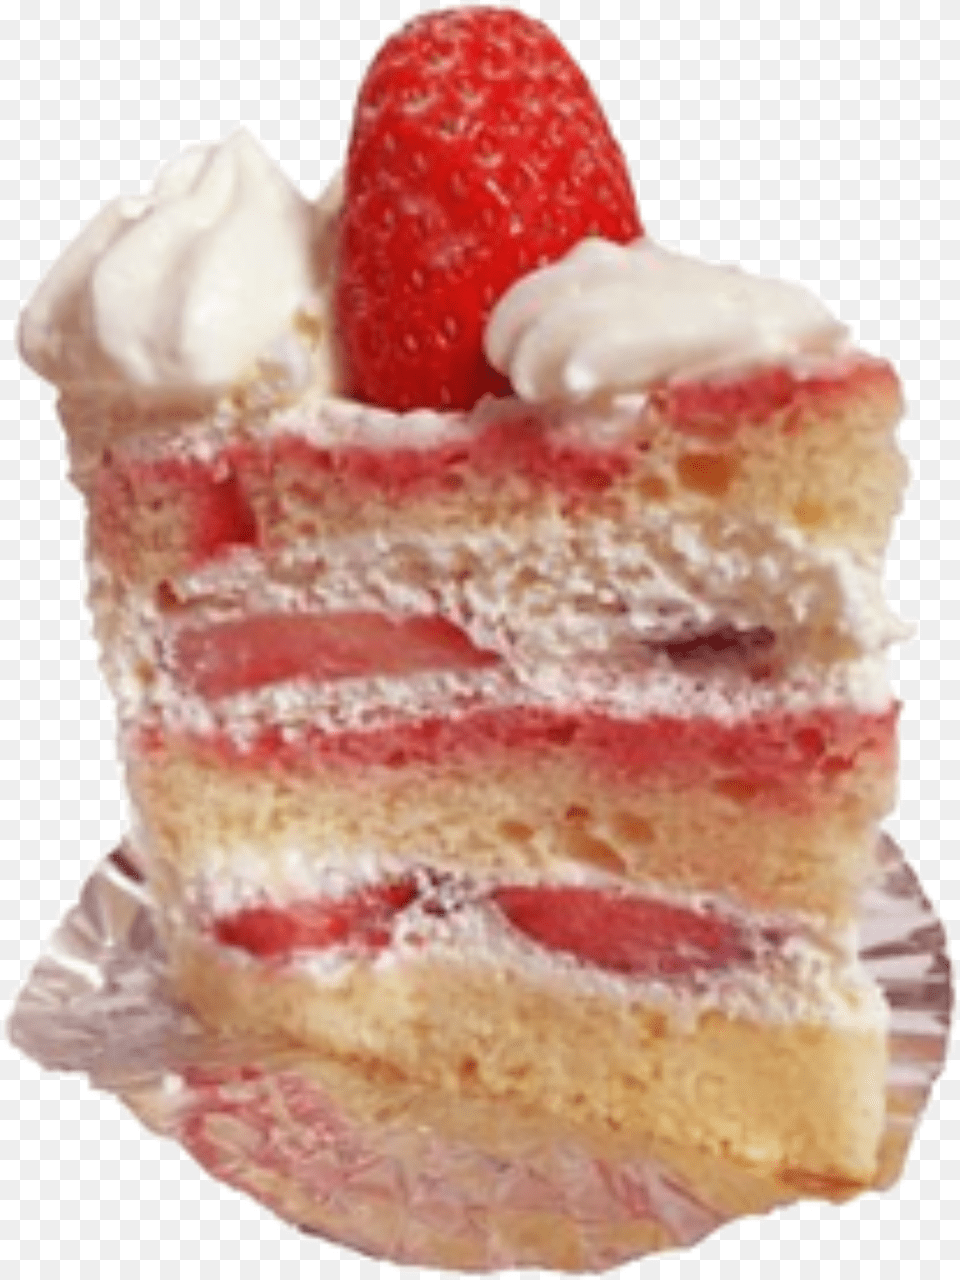 Strawberry Shortcake Strawberry Cake Slice Free Png